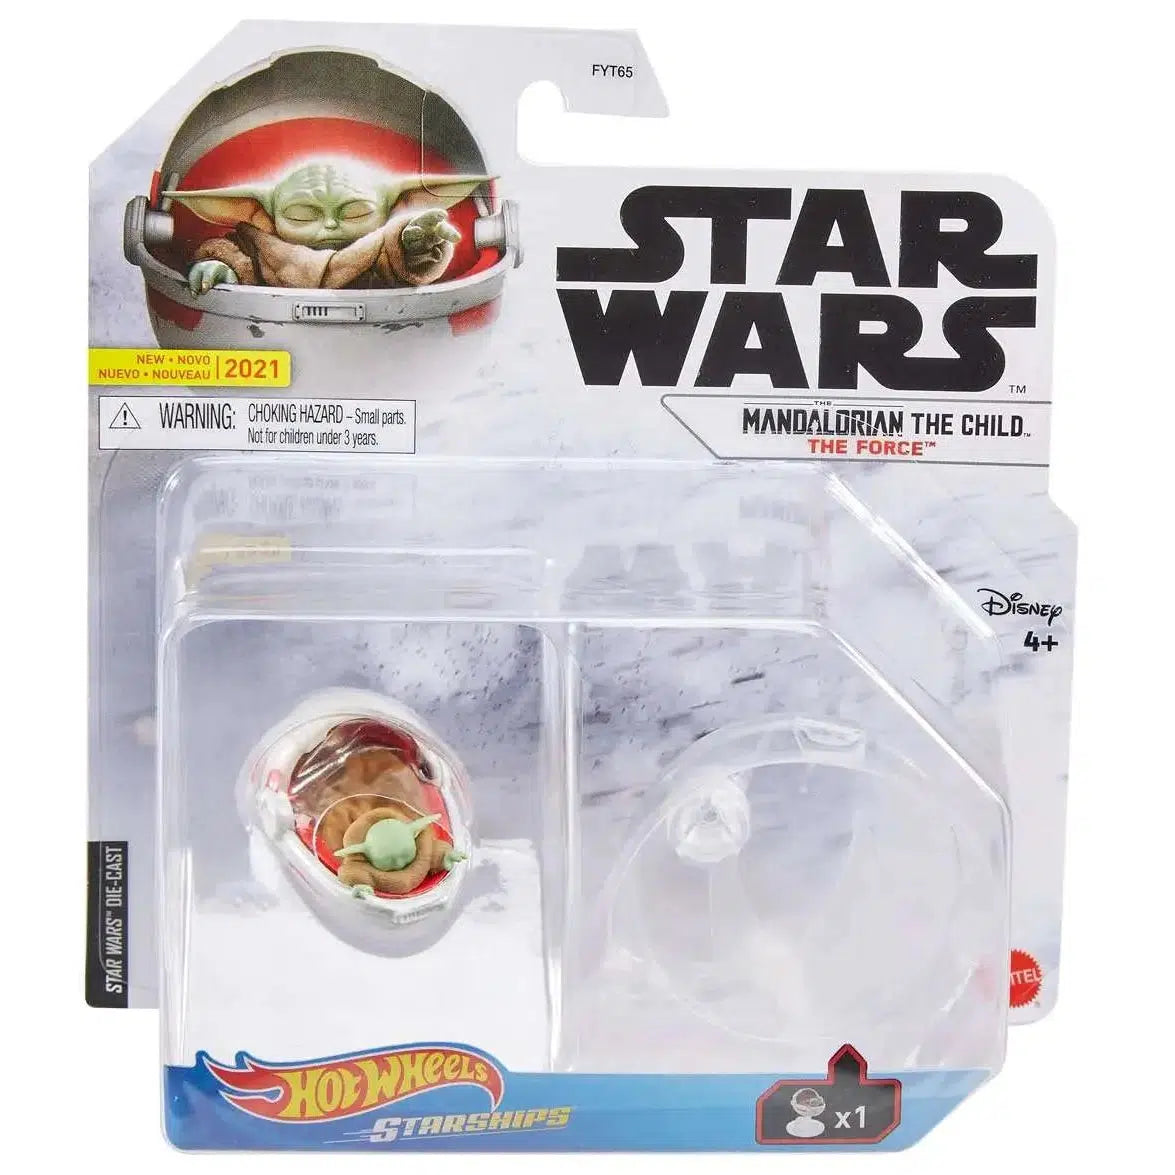 Mattel-Hot Wheels Star Wars Starships Vehicles-GWV39-The Force-Legacy Toys